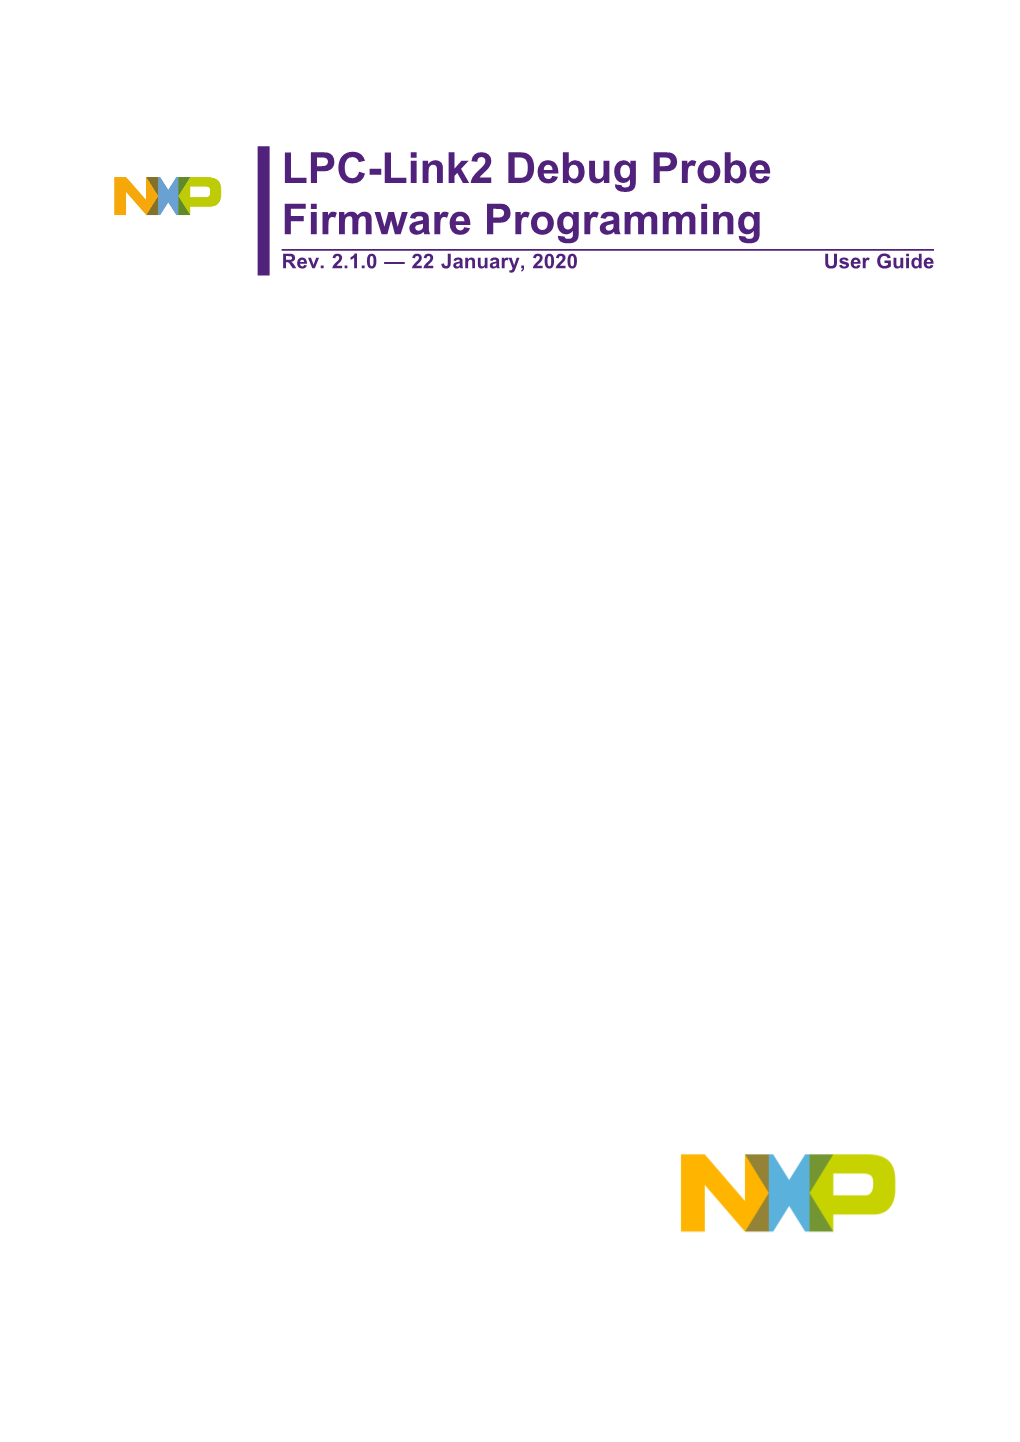 LPC-Link2 Debug Probe Firmware Programming Rev